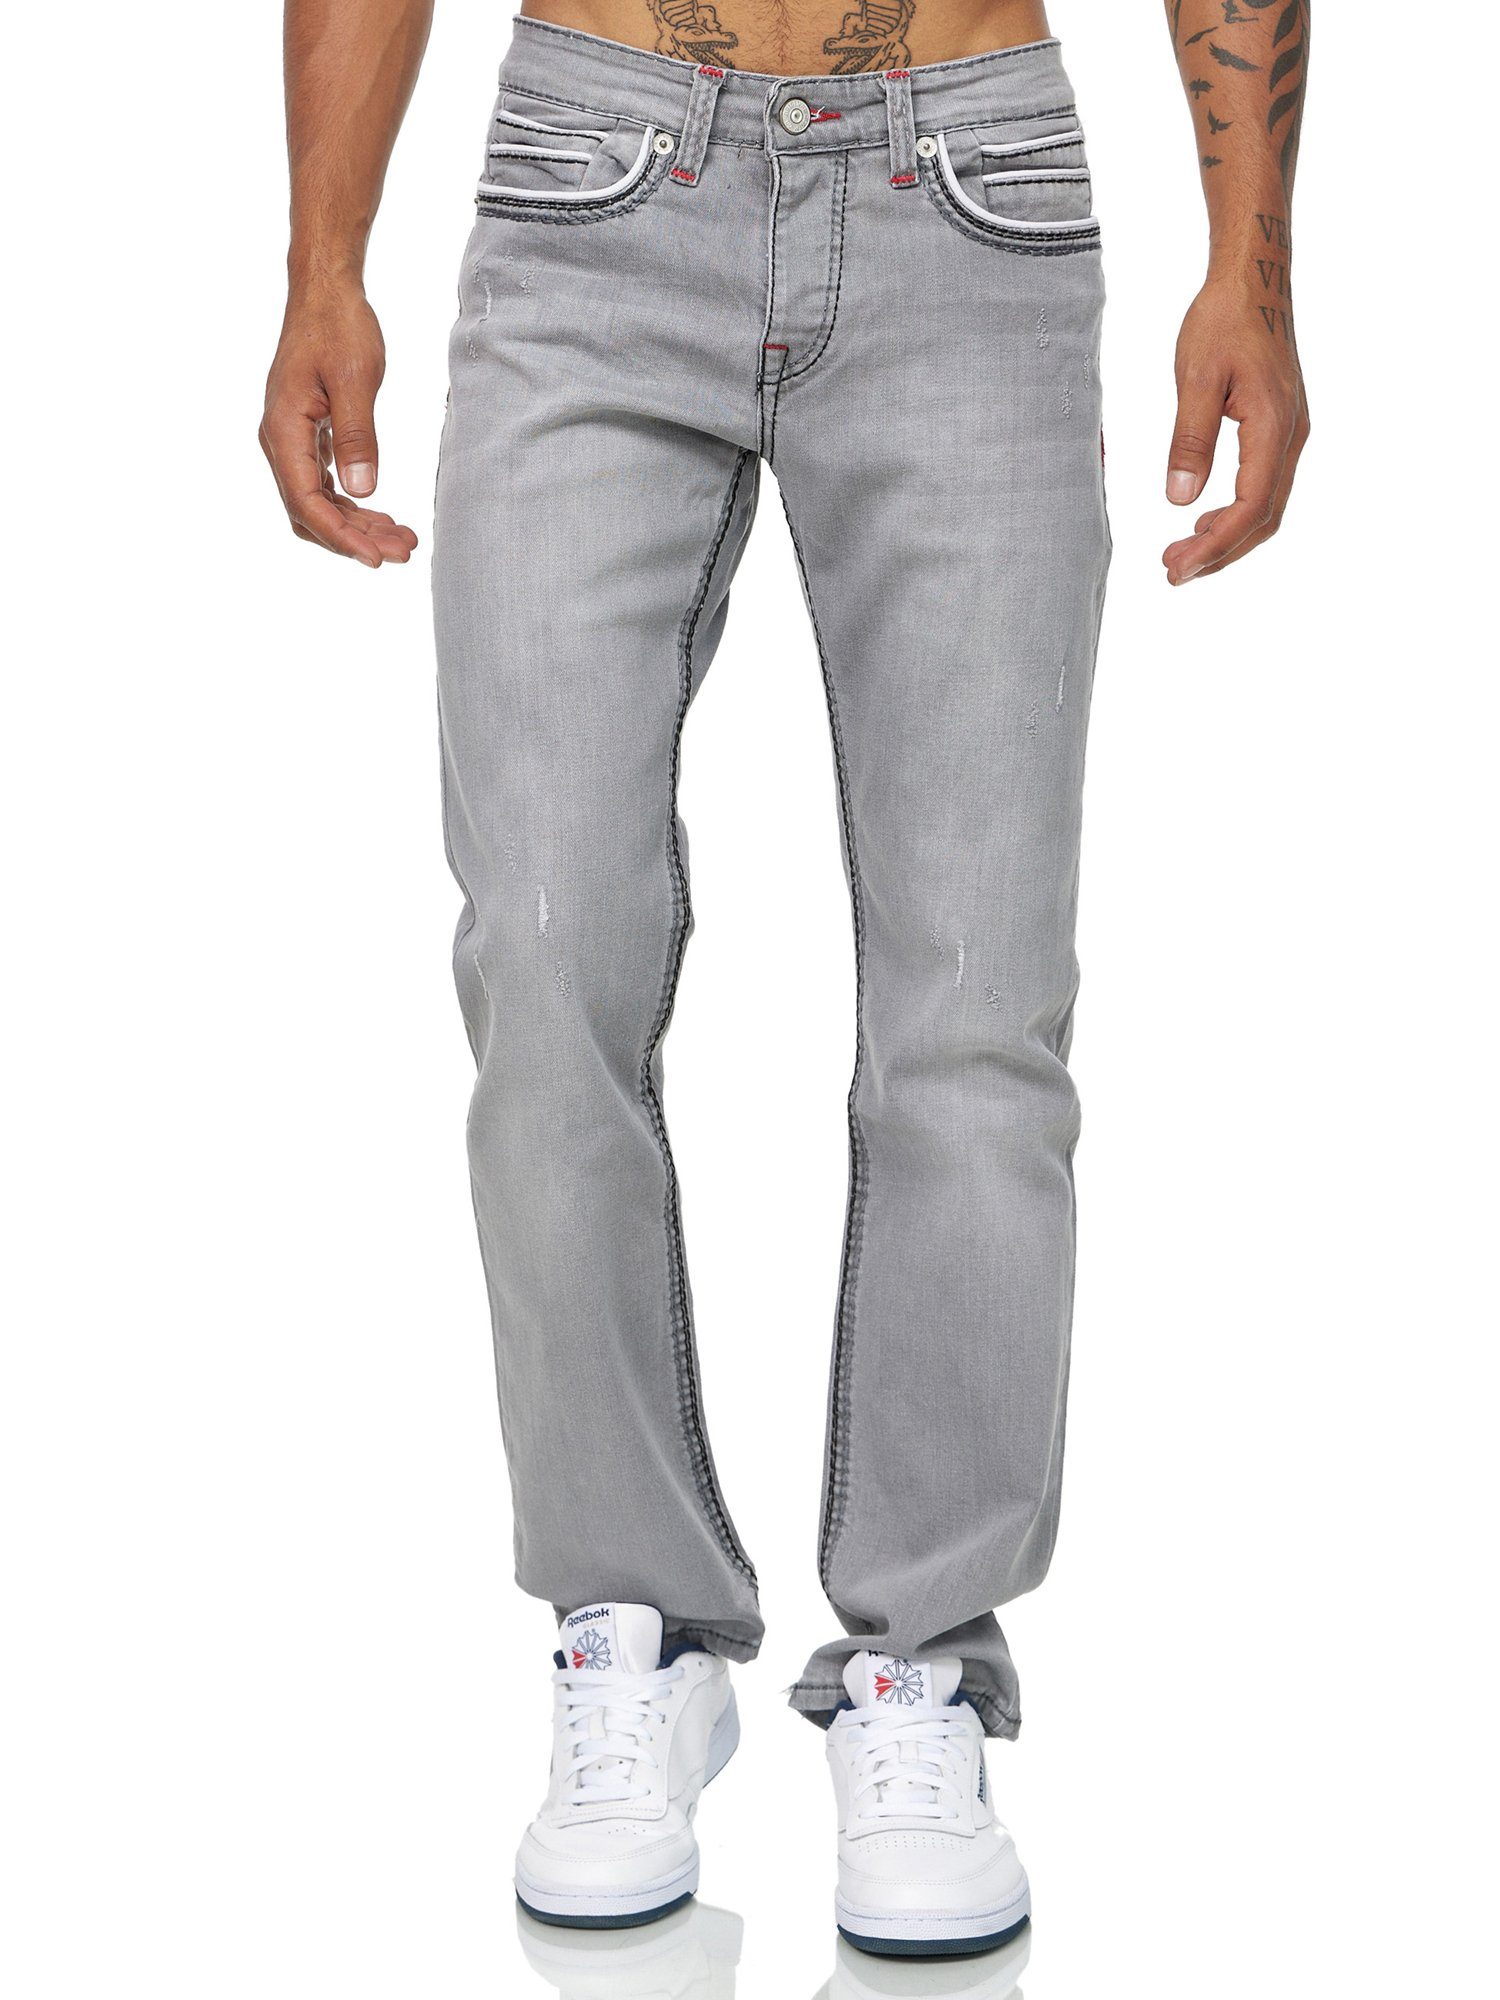 Herren Jeans Modell Code47 3337 Grau Regular-fit-Jeans Code47